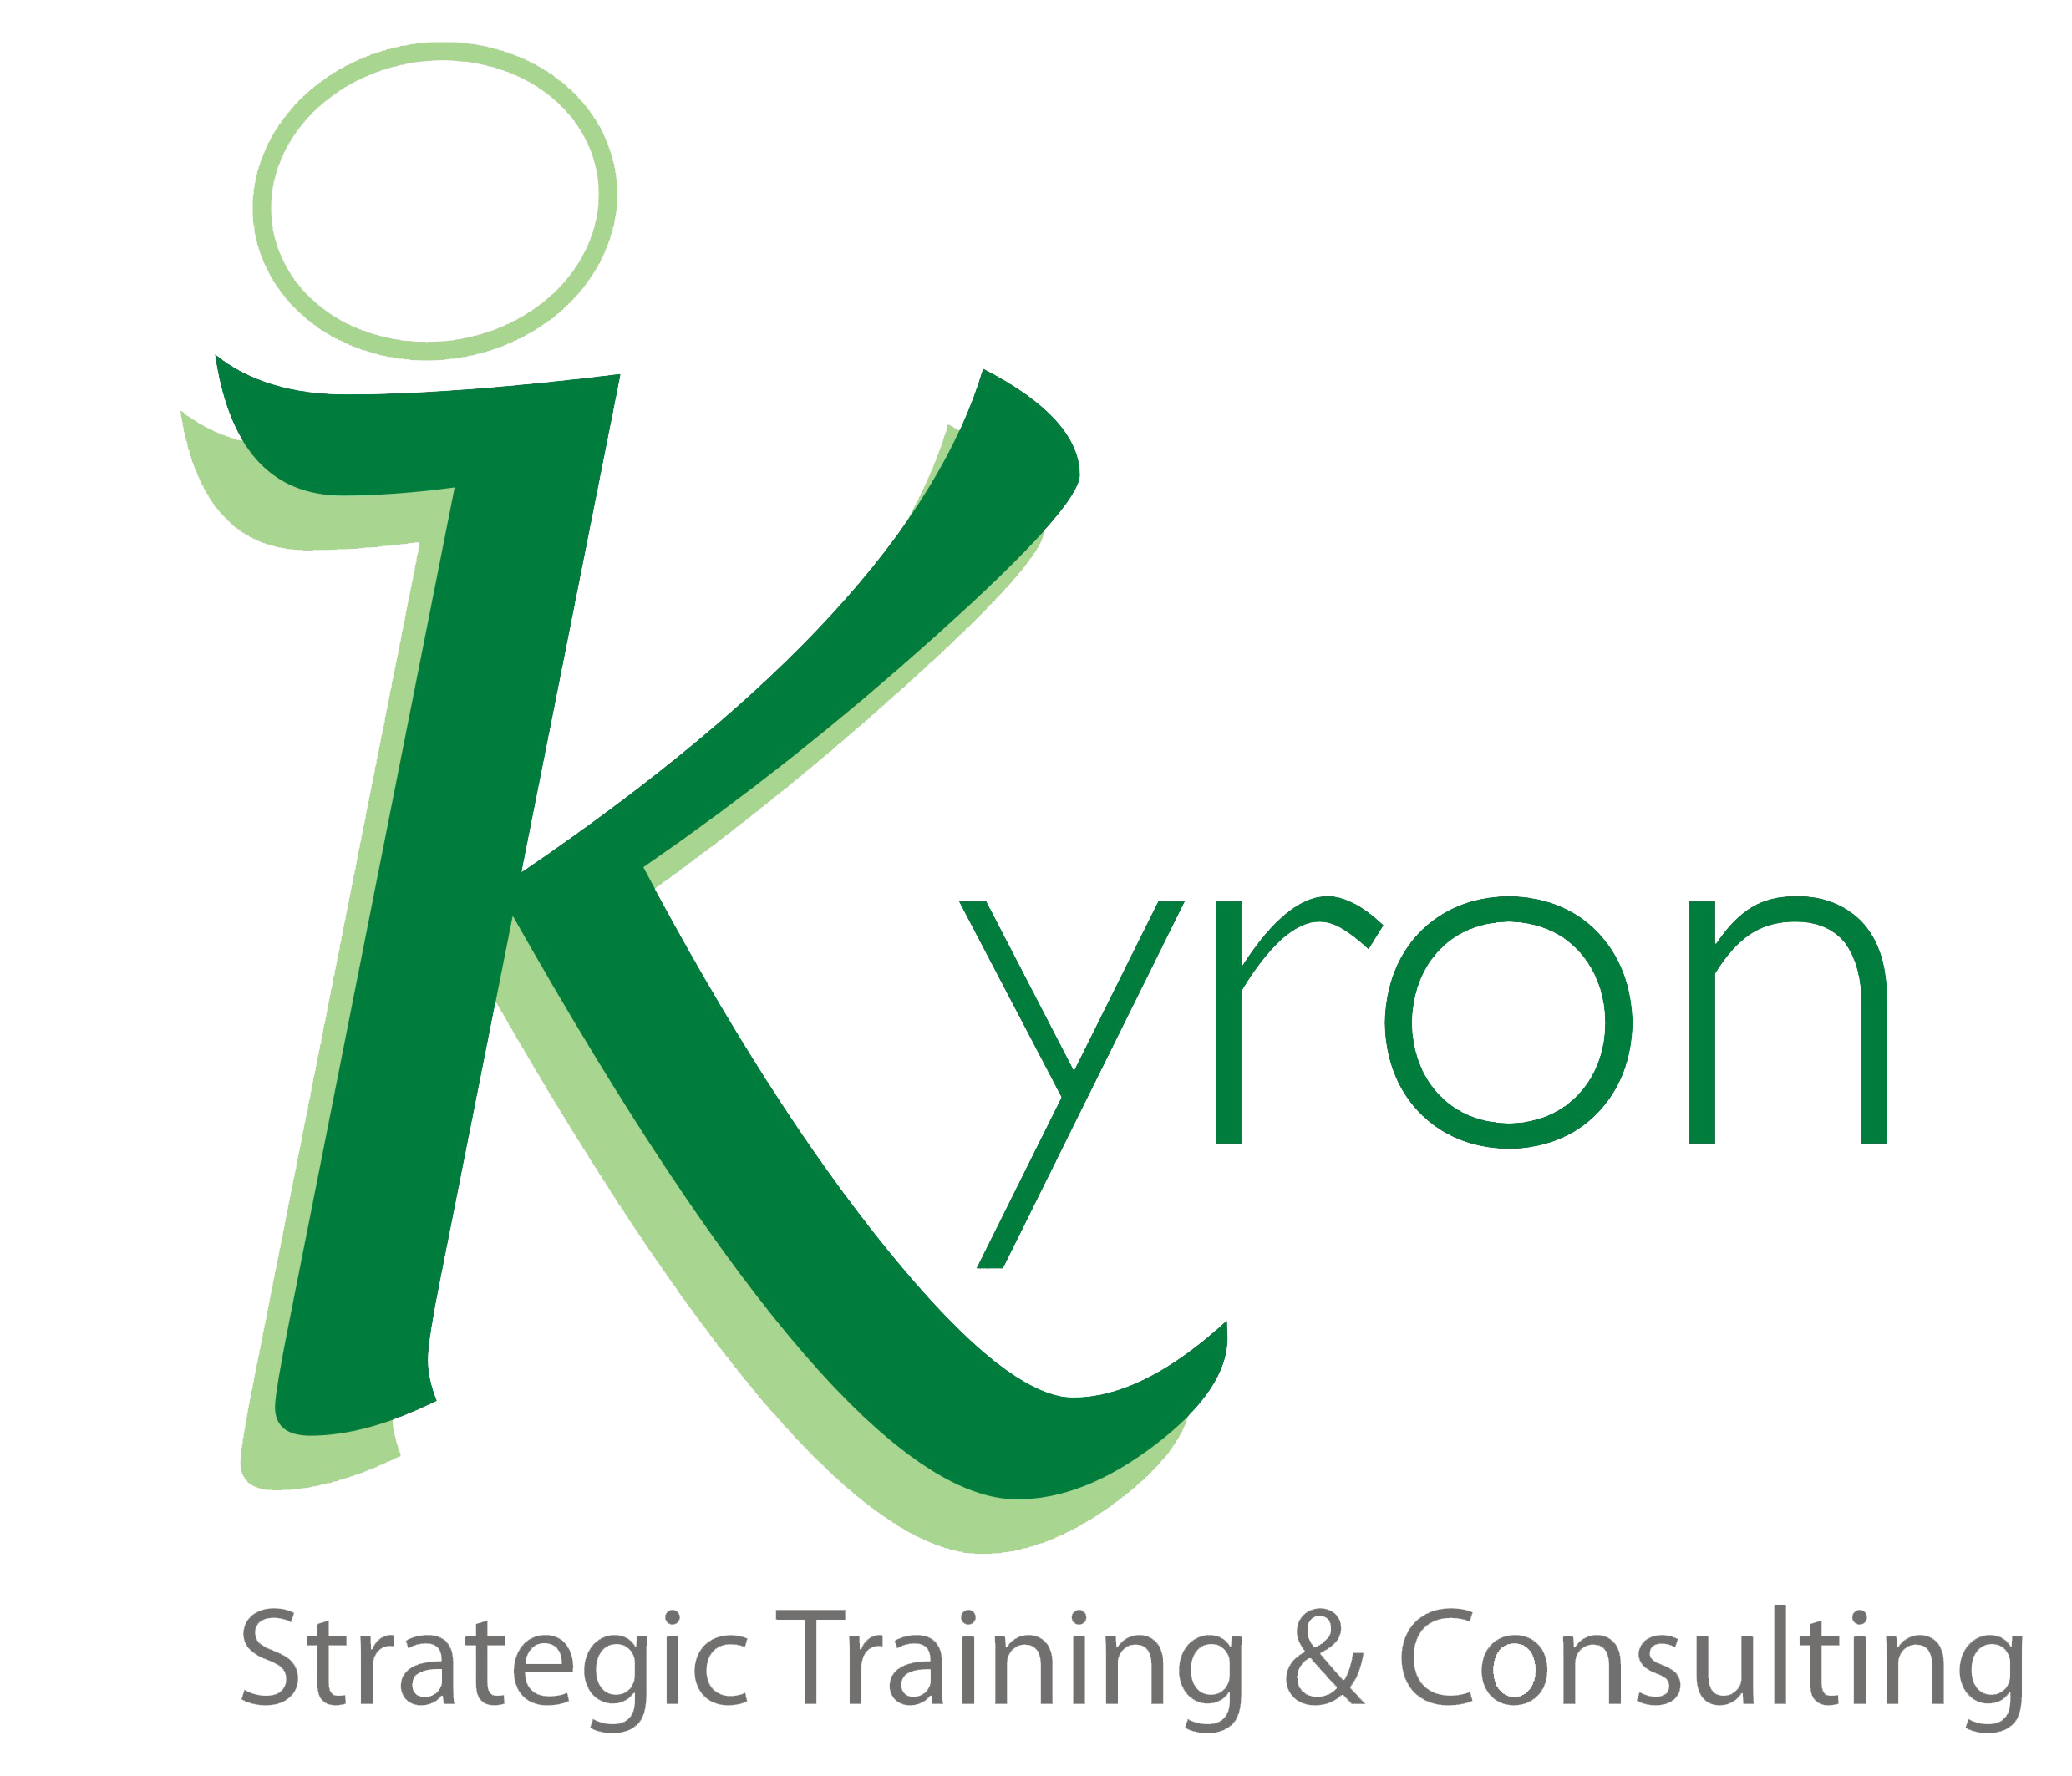 Kyron Strategic Training & Consulting